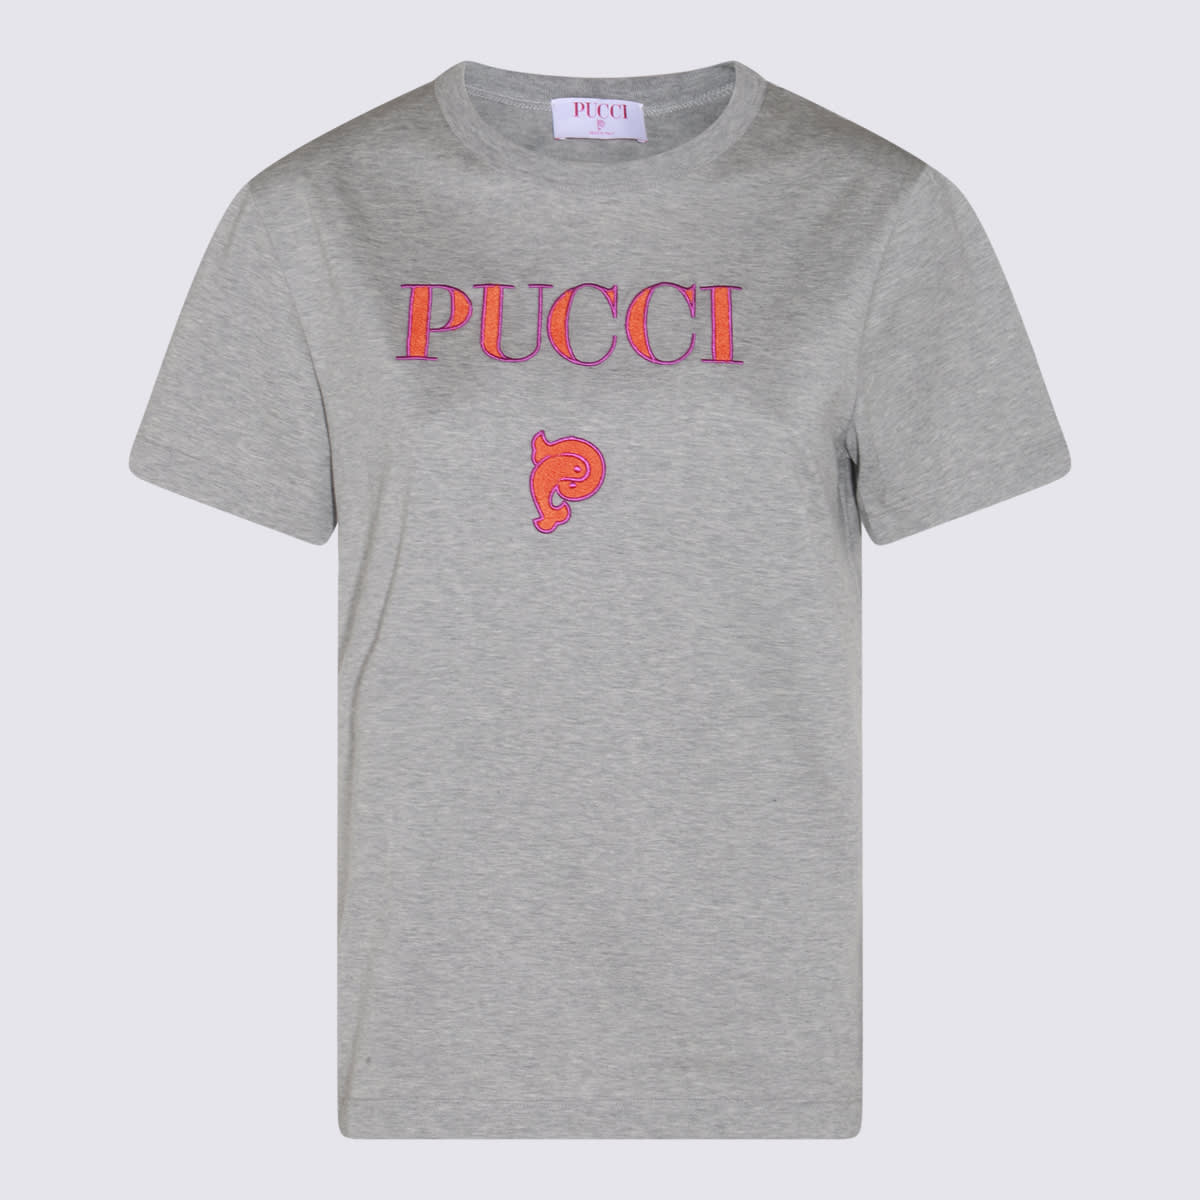 Pucci Grey Cotton T-shirt